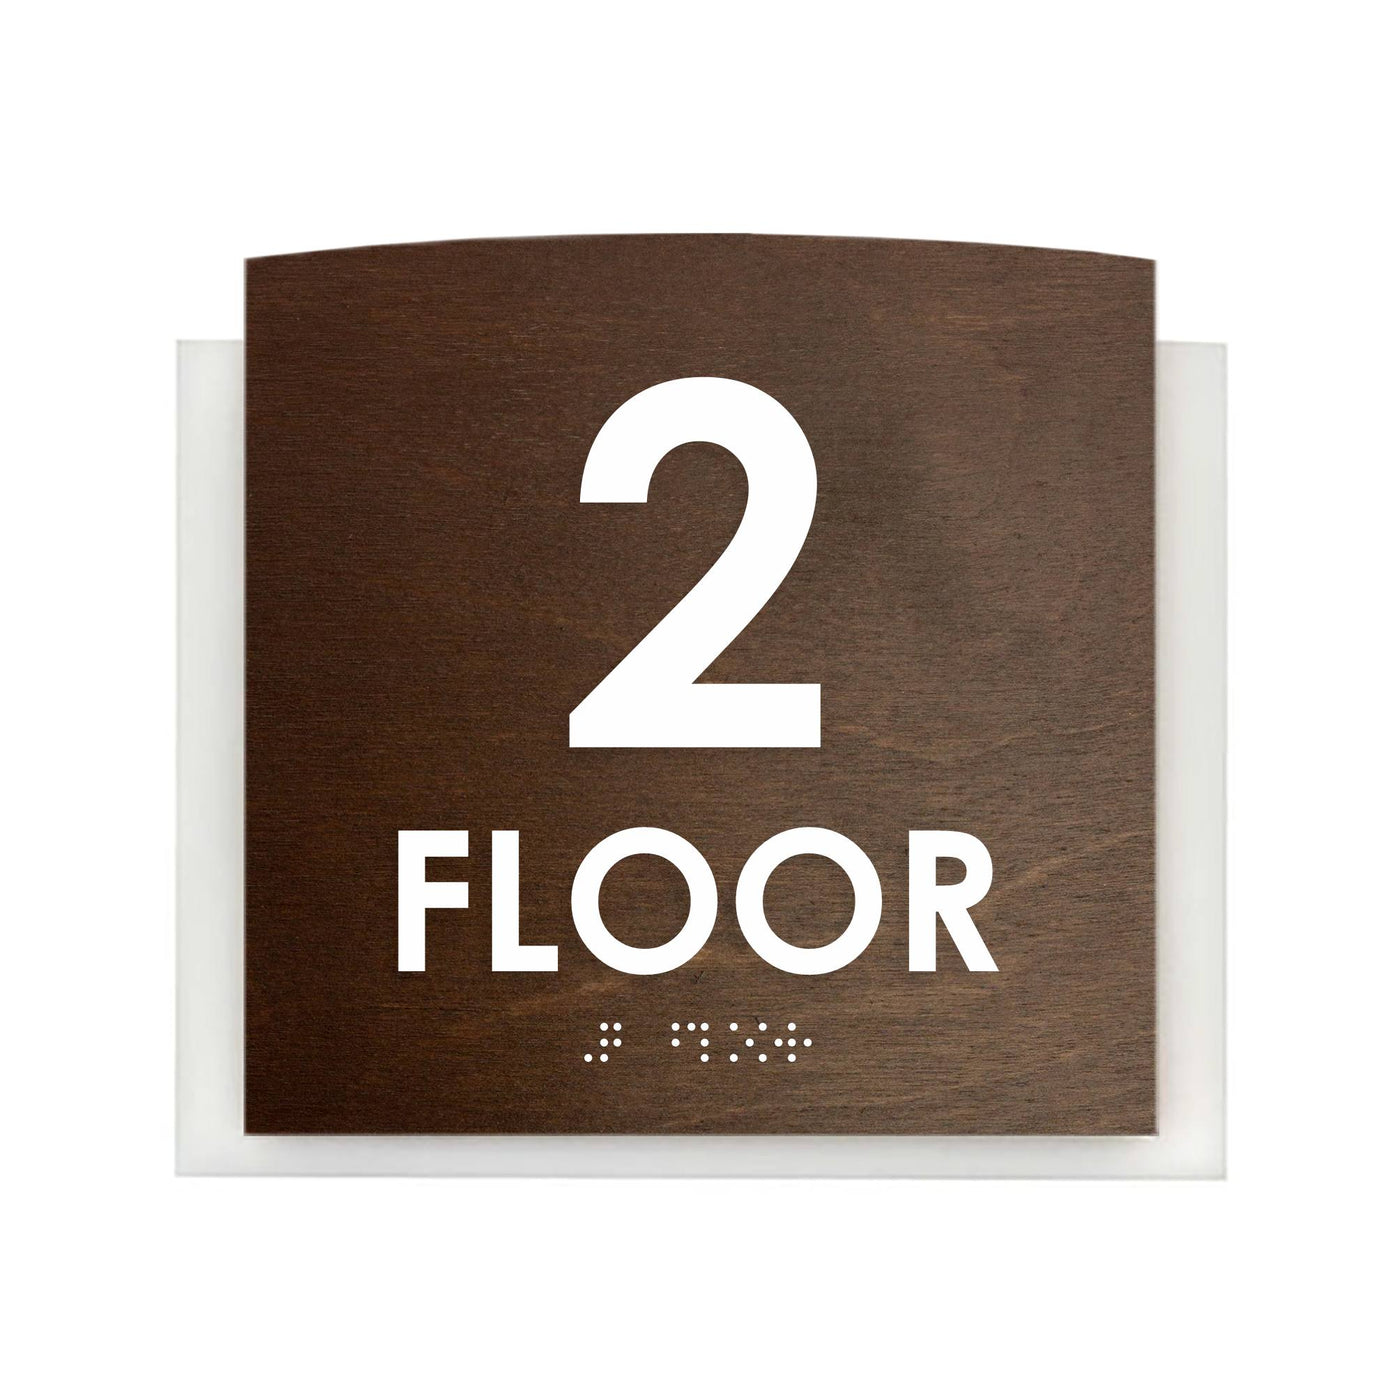 Floor Signs - 2nd Floor "Scandza" Design